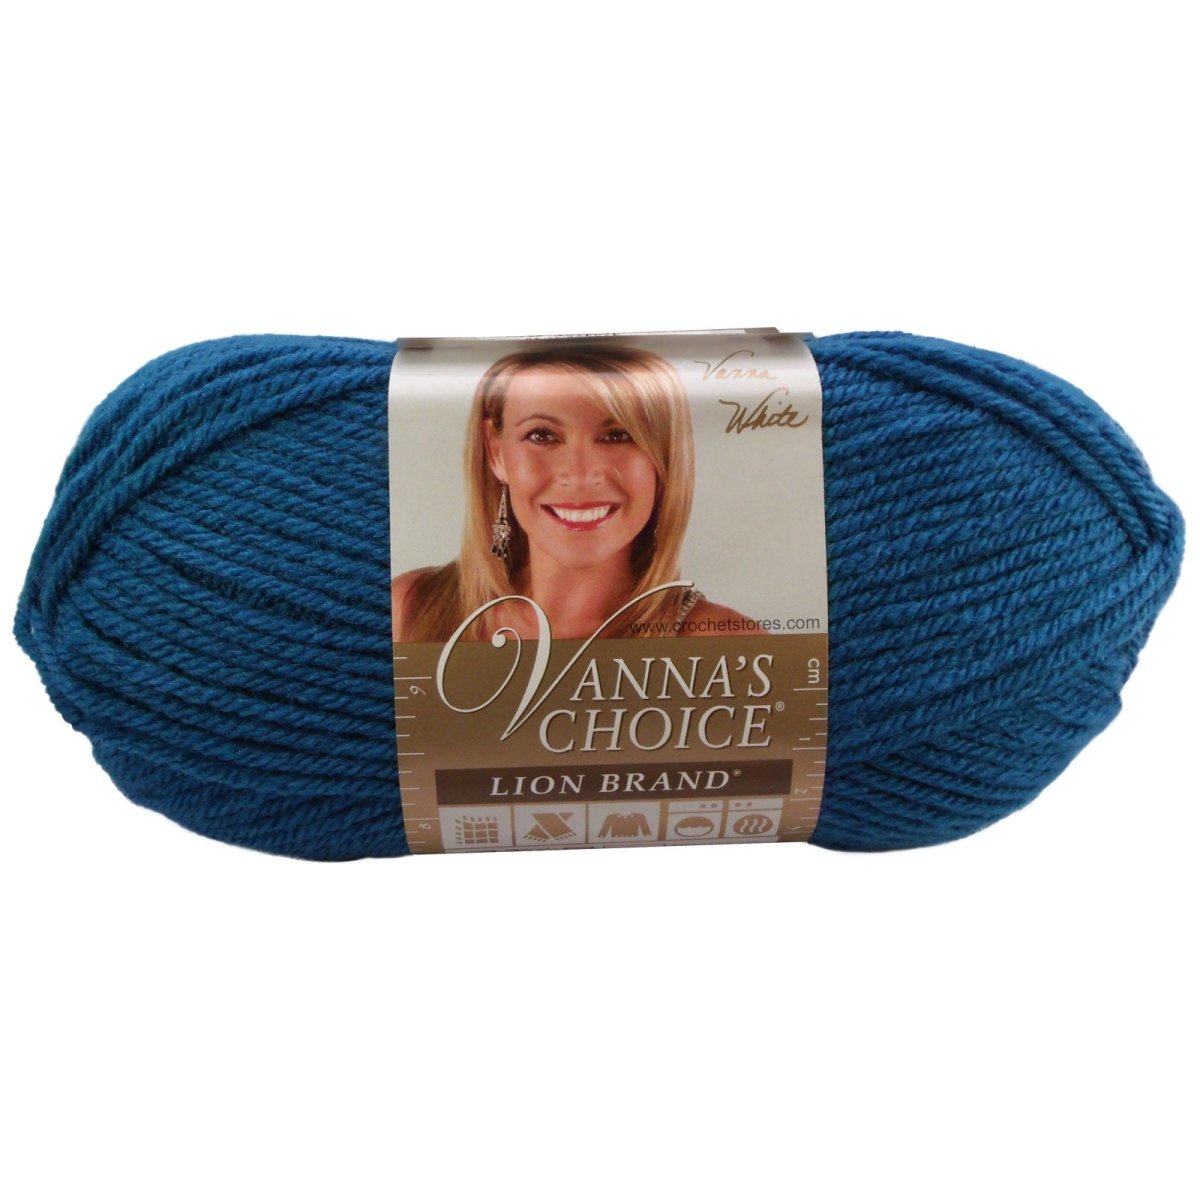 VANNAS CHOICE - Crochetstores860-106